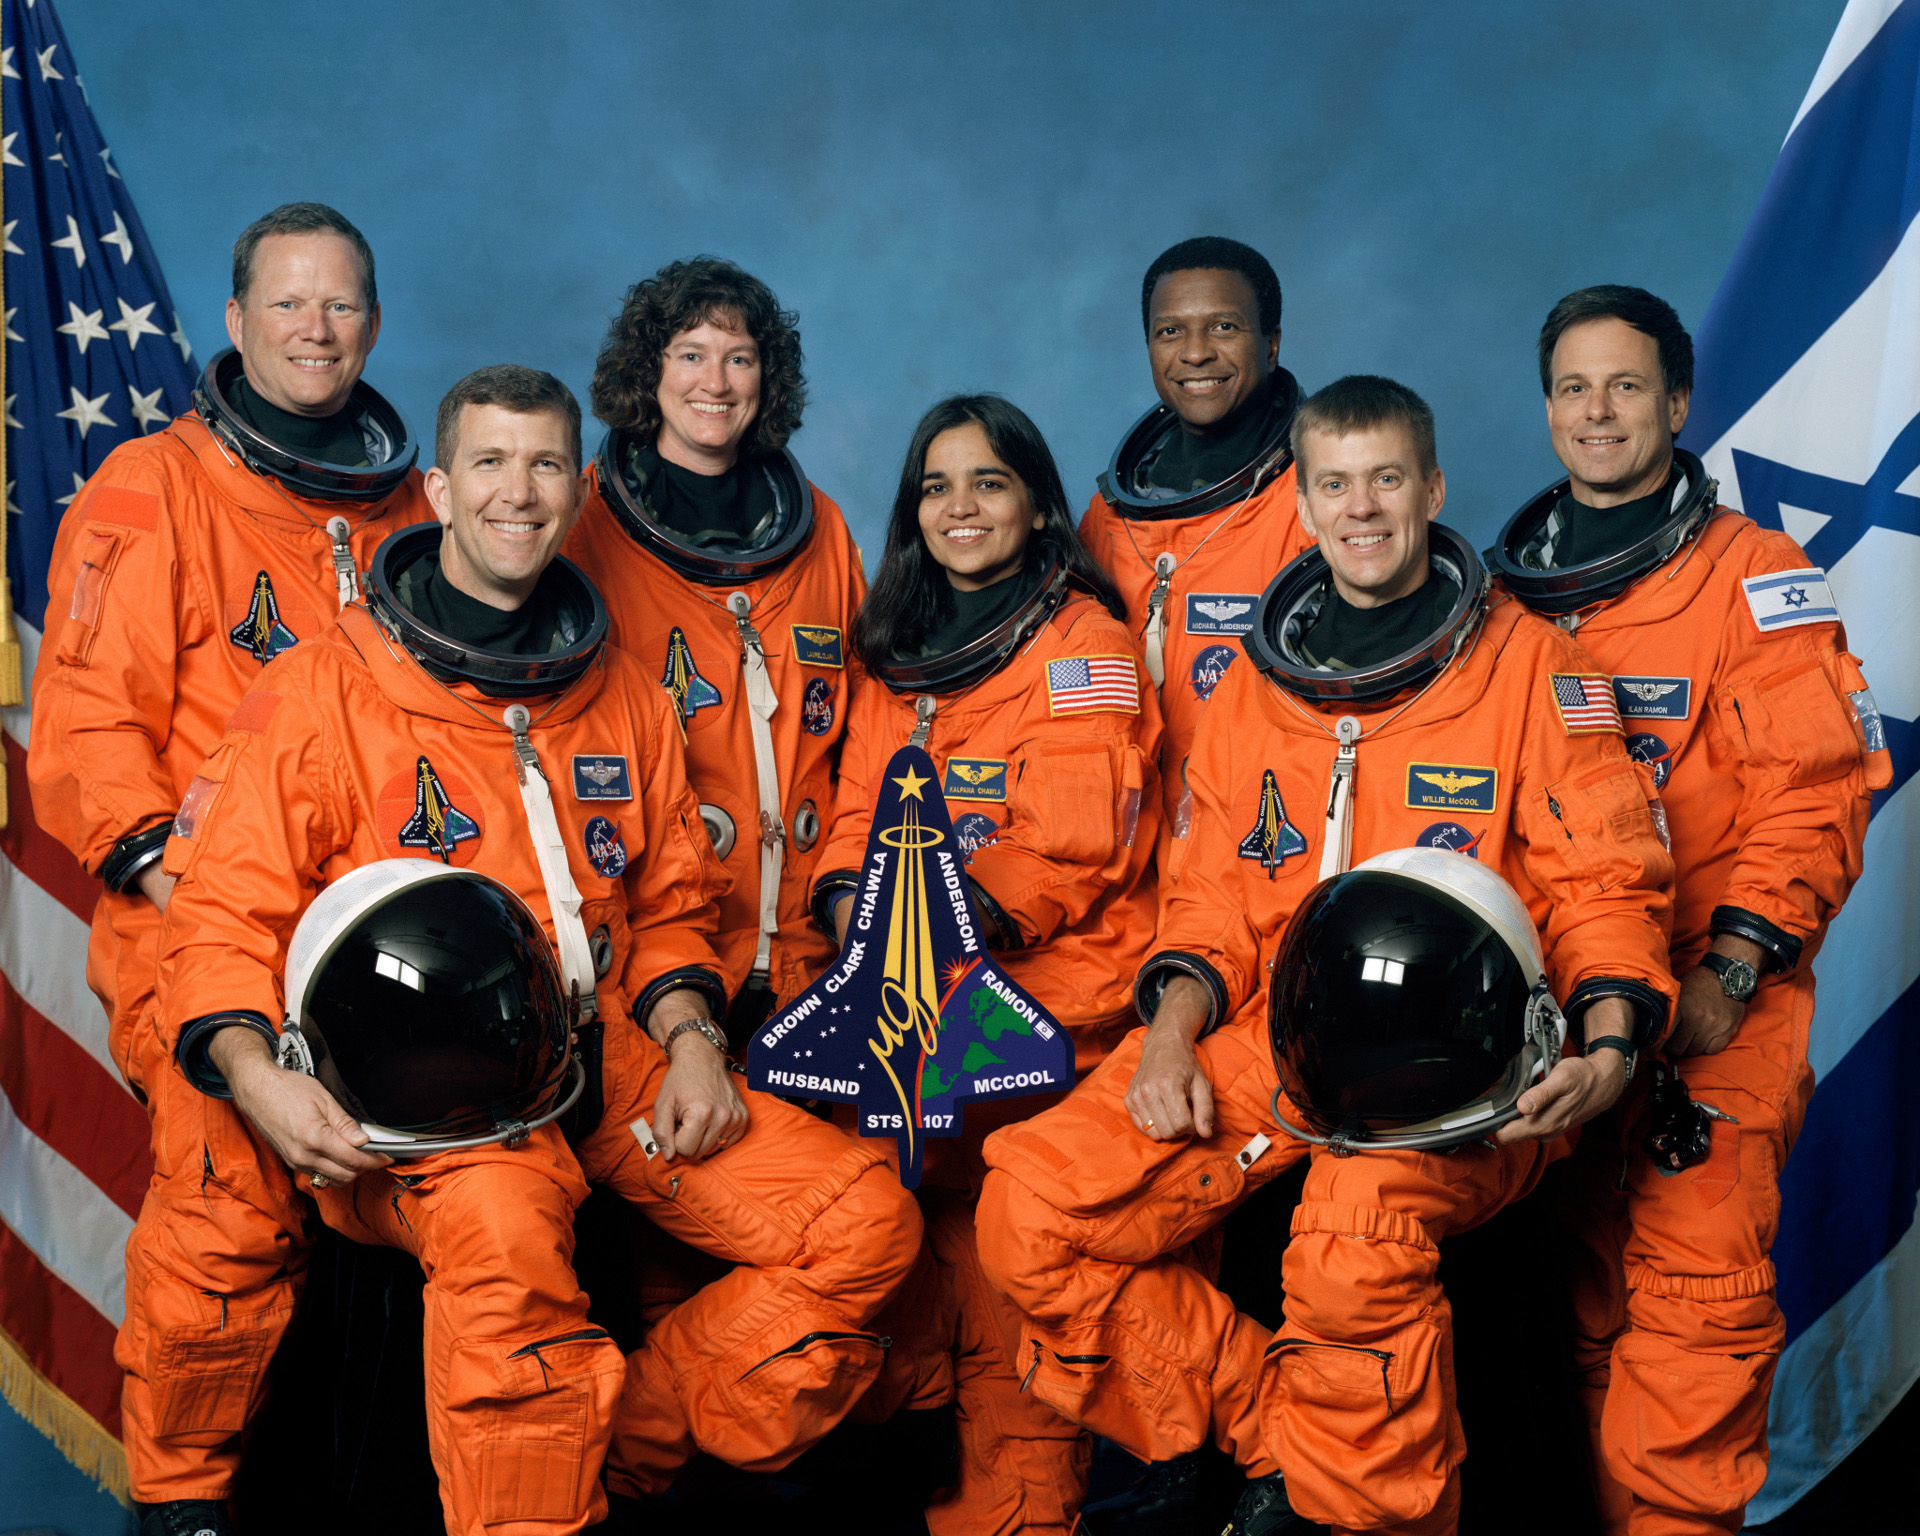 L'équipage de la mission STS-107 de la navette Columbia - Accident - Février 2003 - NASA - David Brown - Laurel Clark - Michael Anderson - Ilan Ramon - Rick Husband - Kalpana Chawla - William McCool